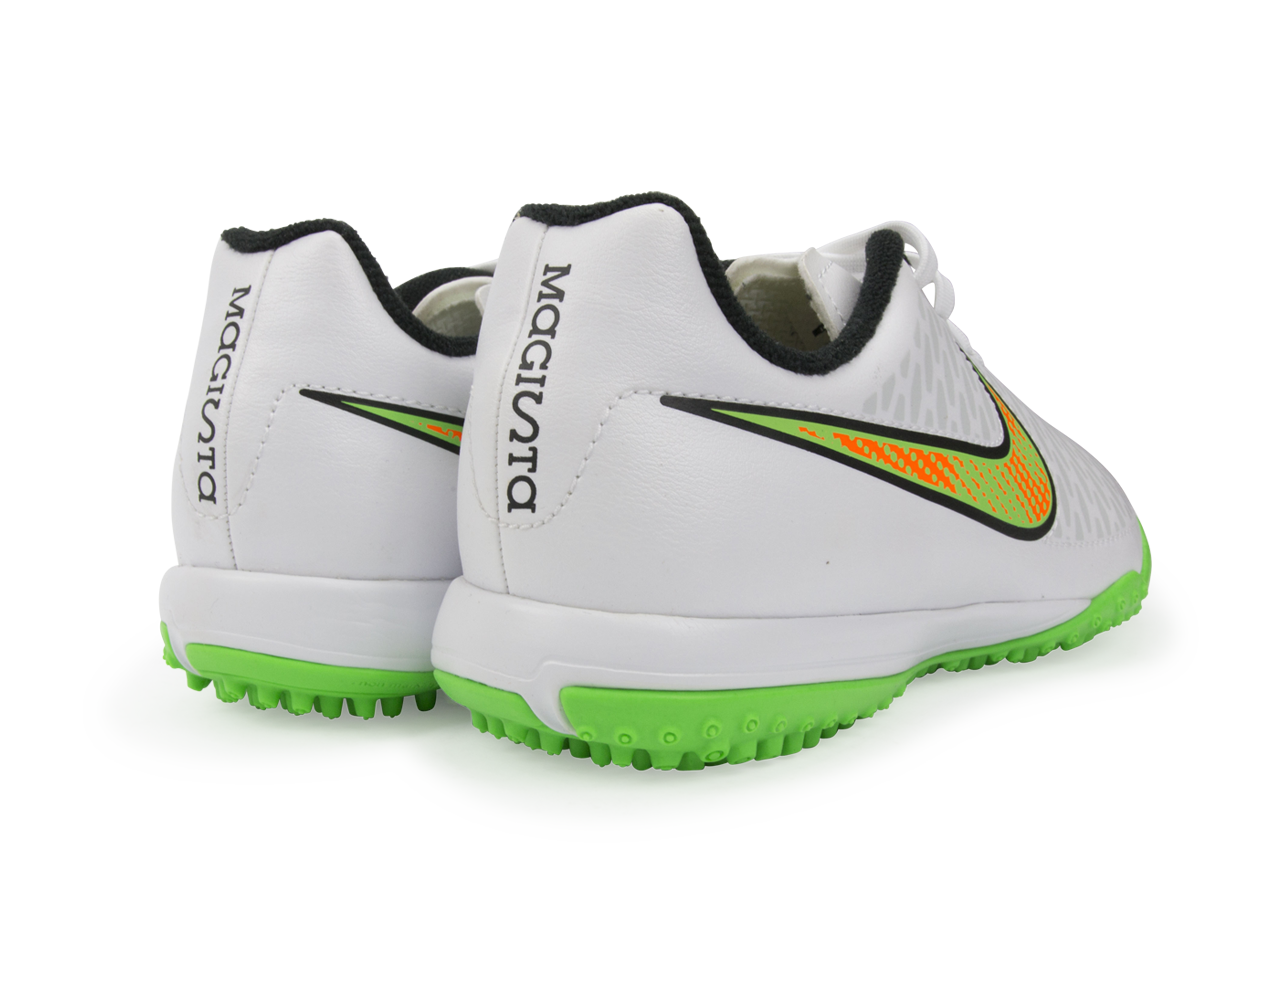 Nike Kids Magista Onda Turf Soccer Shoes White/Poison Green/Black